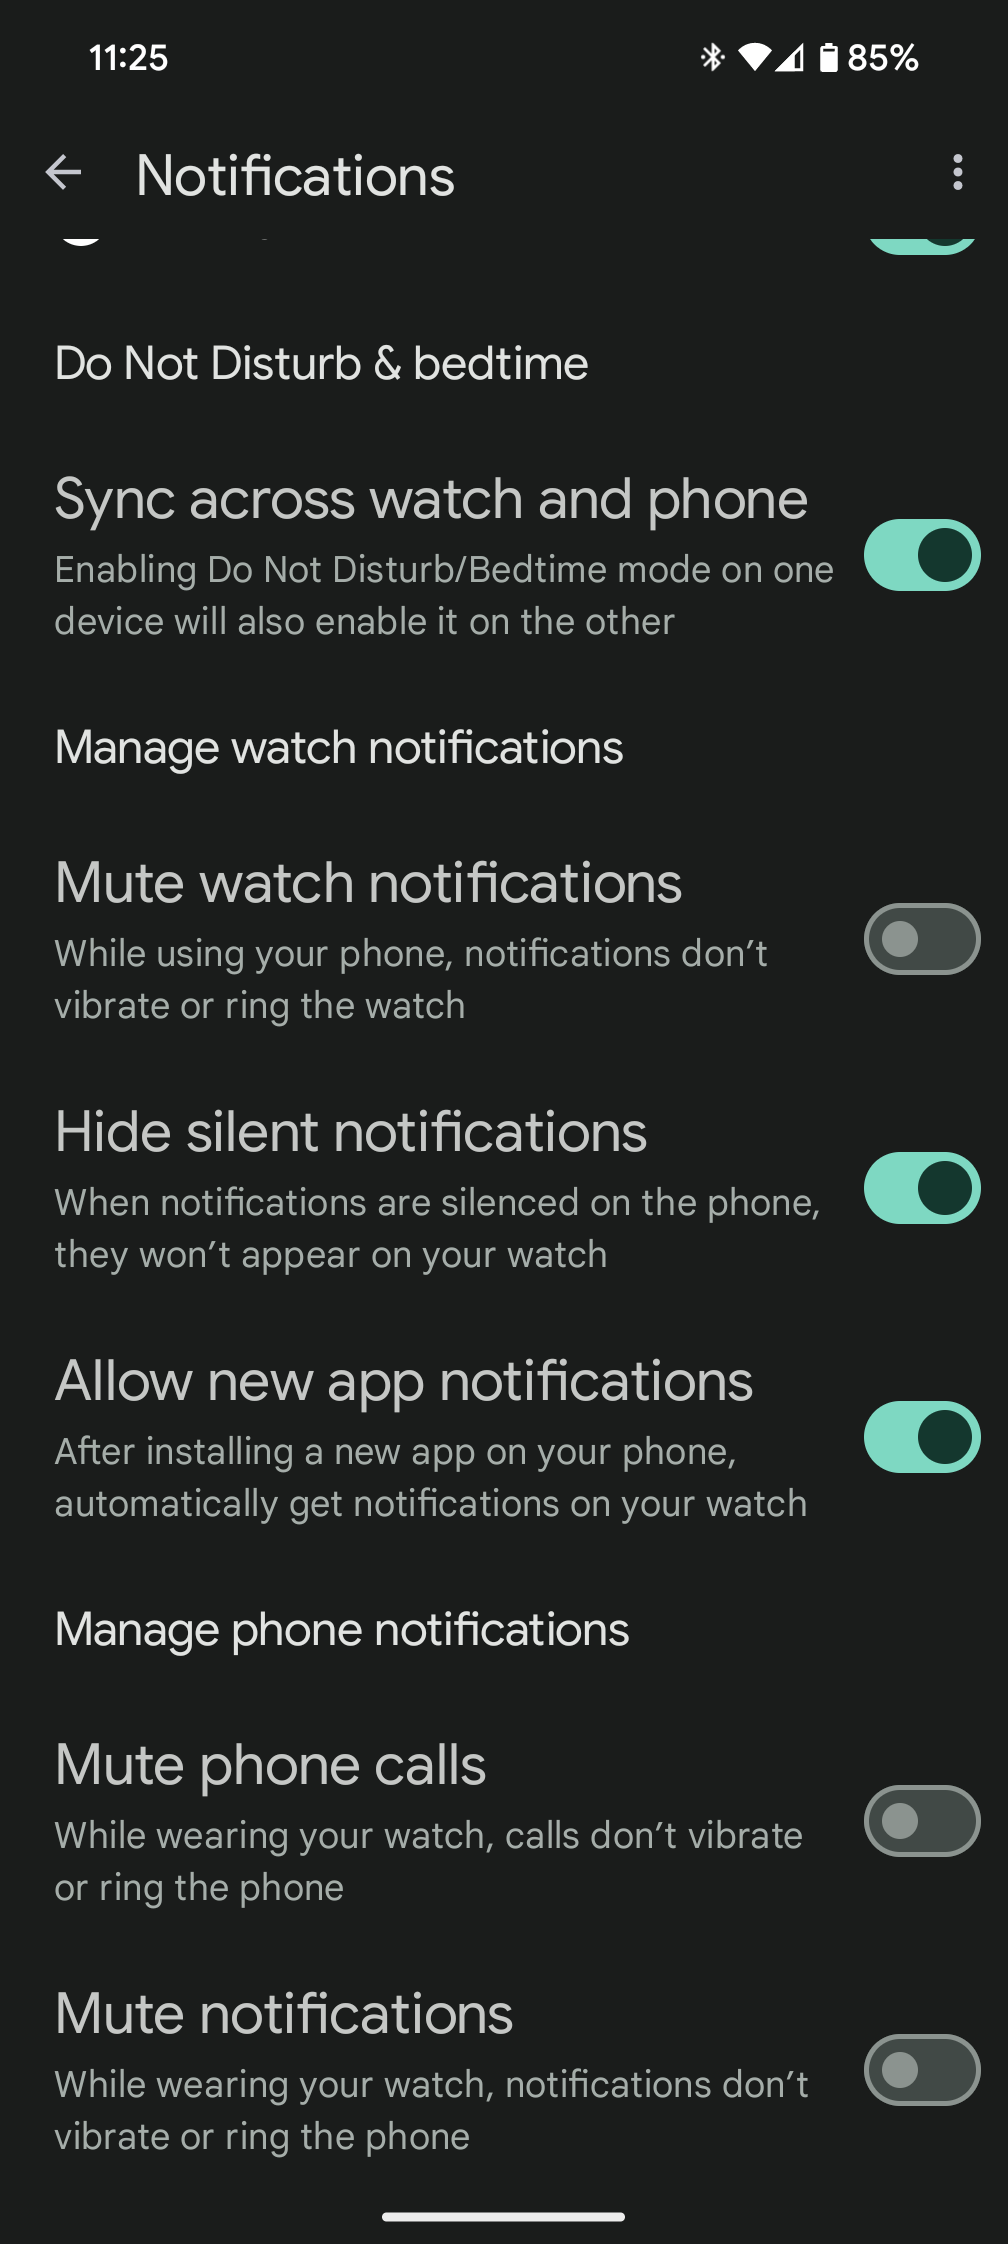 google pixel watch app sync dnd bedtime mode 2